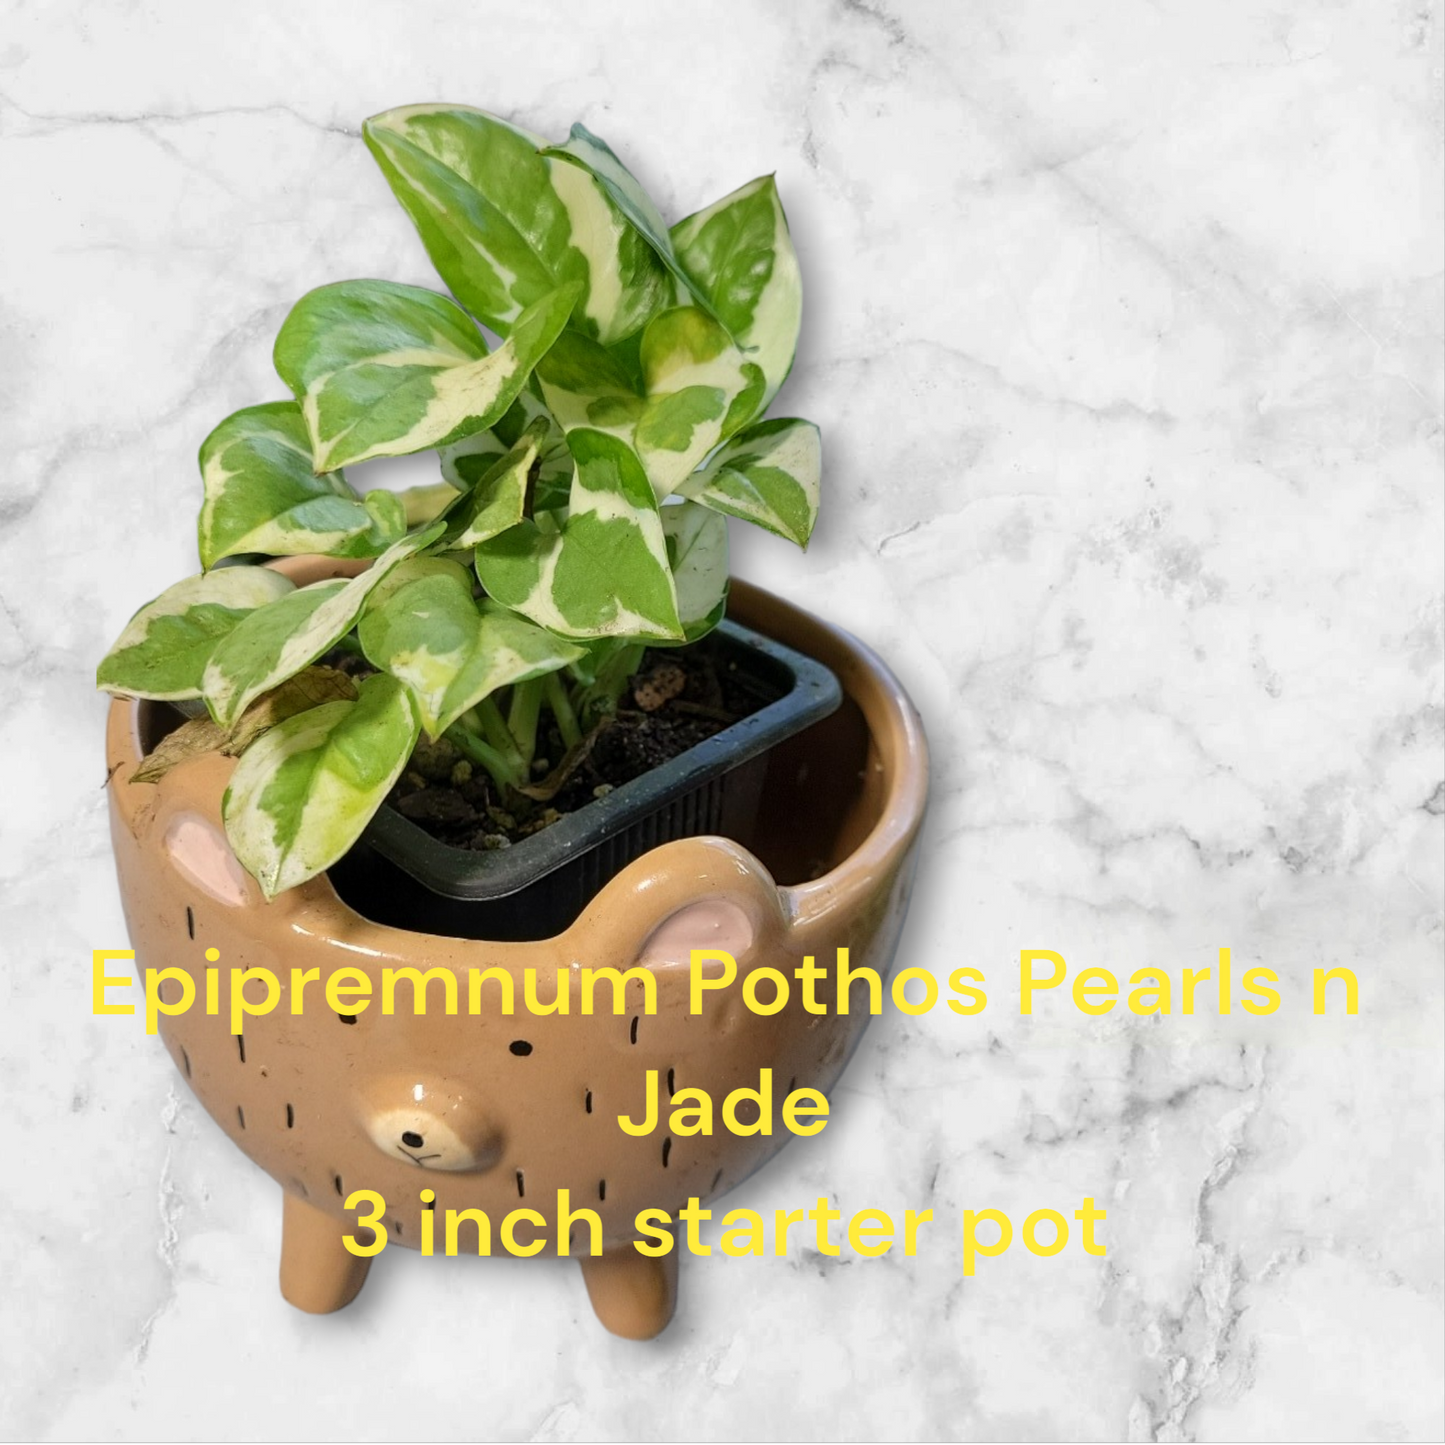 Epipremnum Pothos Pearls n Jade starter 3 inch pot. Photos b4 Shipping